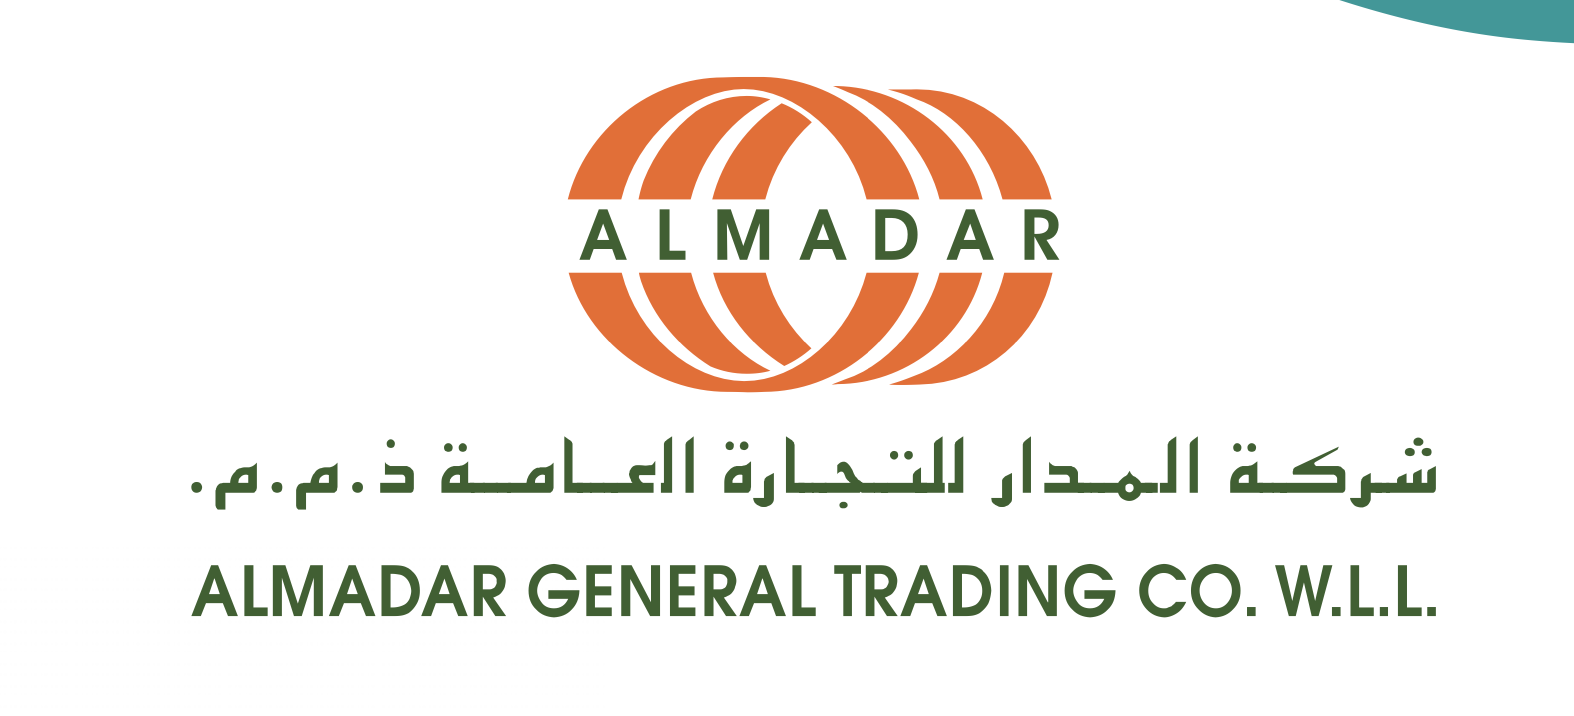 Al Madar General Trading